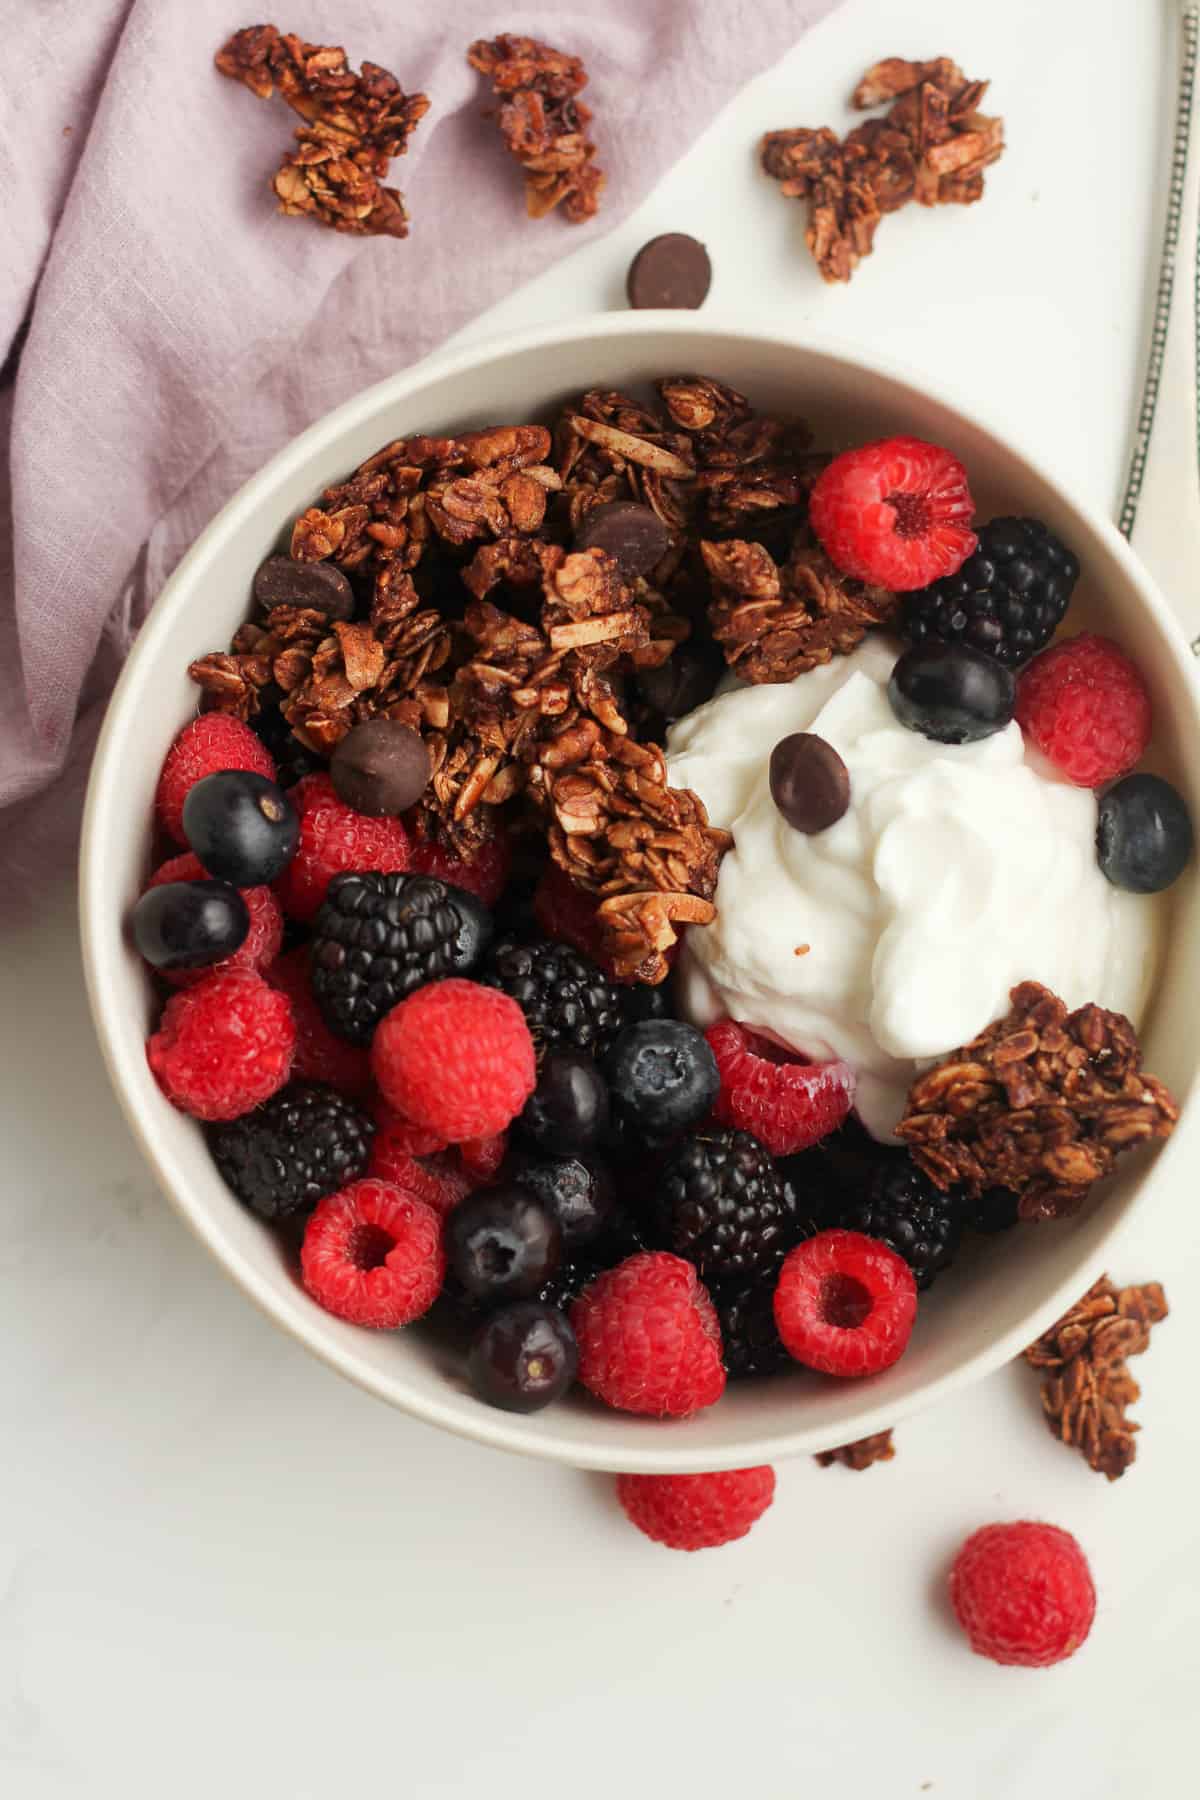 A bowl of yogurt, berries, and chocolate granola.